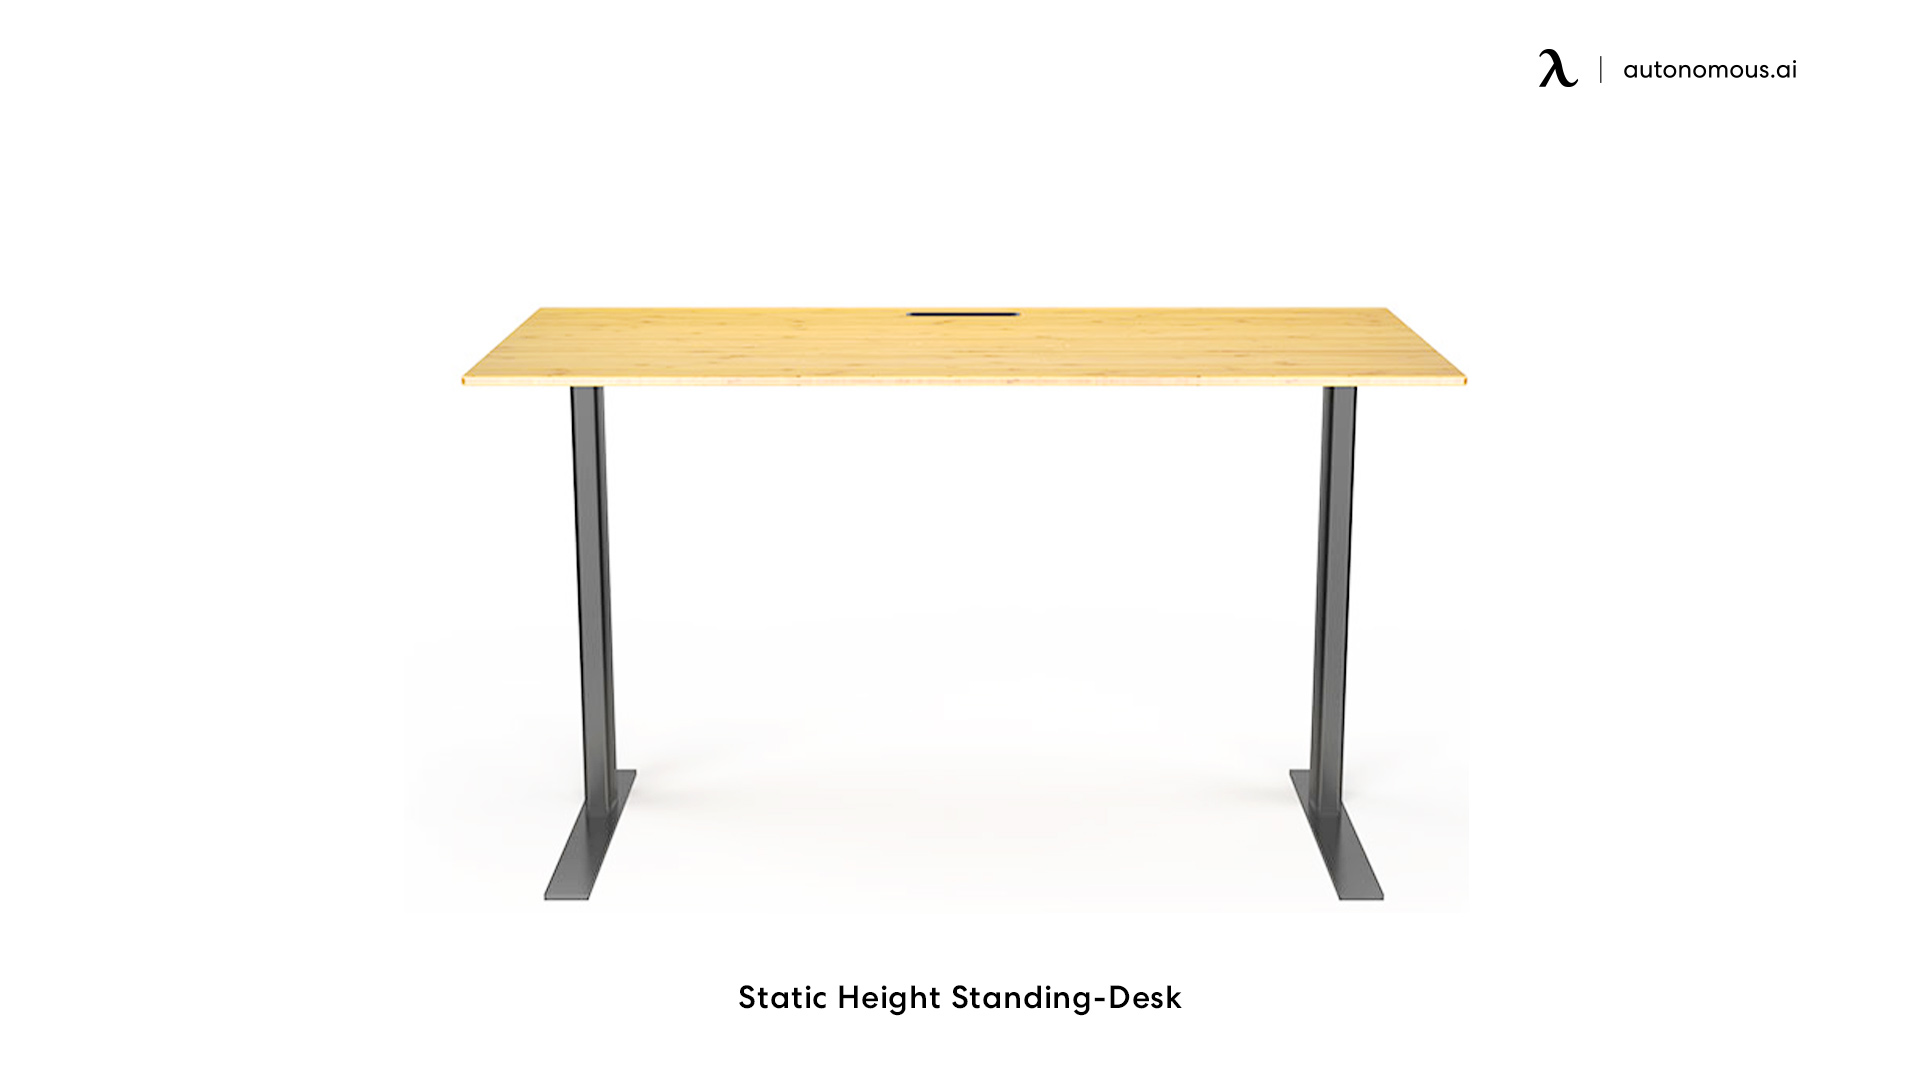 Static Height Standing-Desk